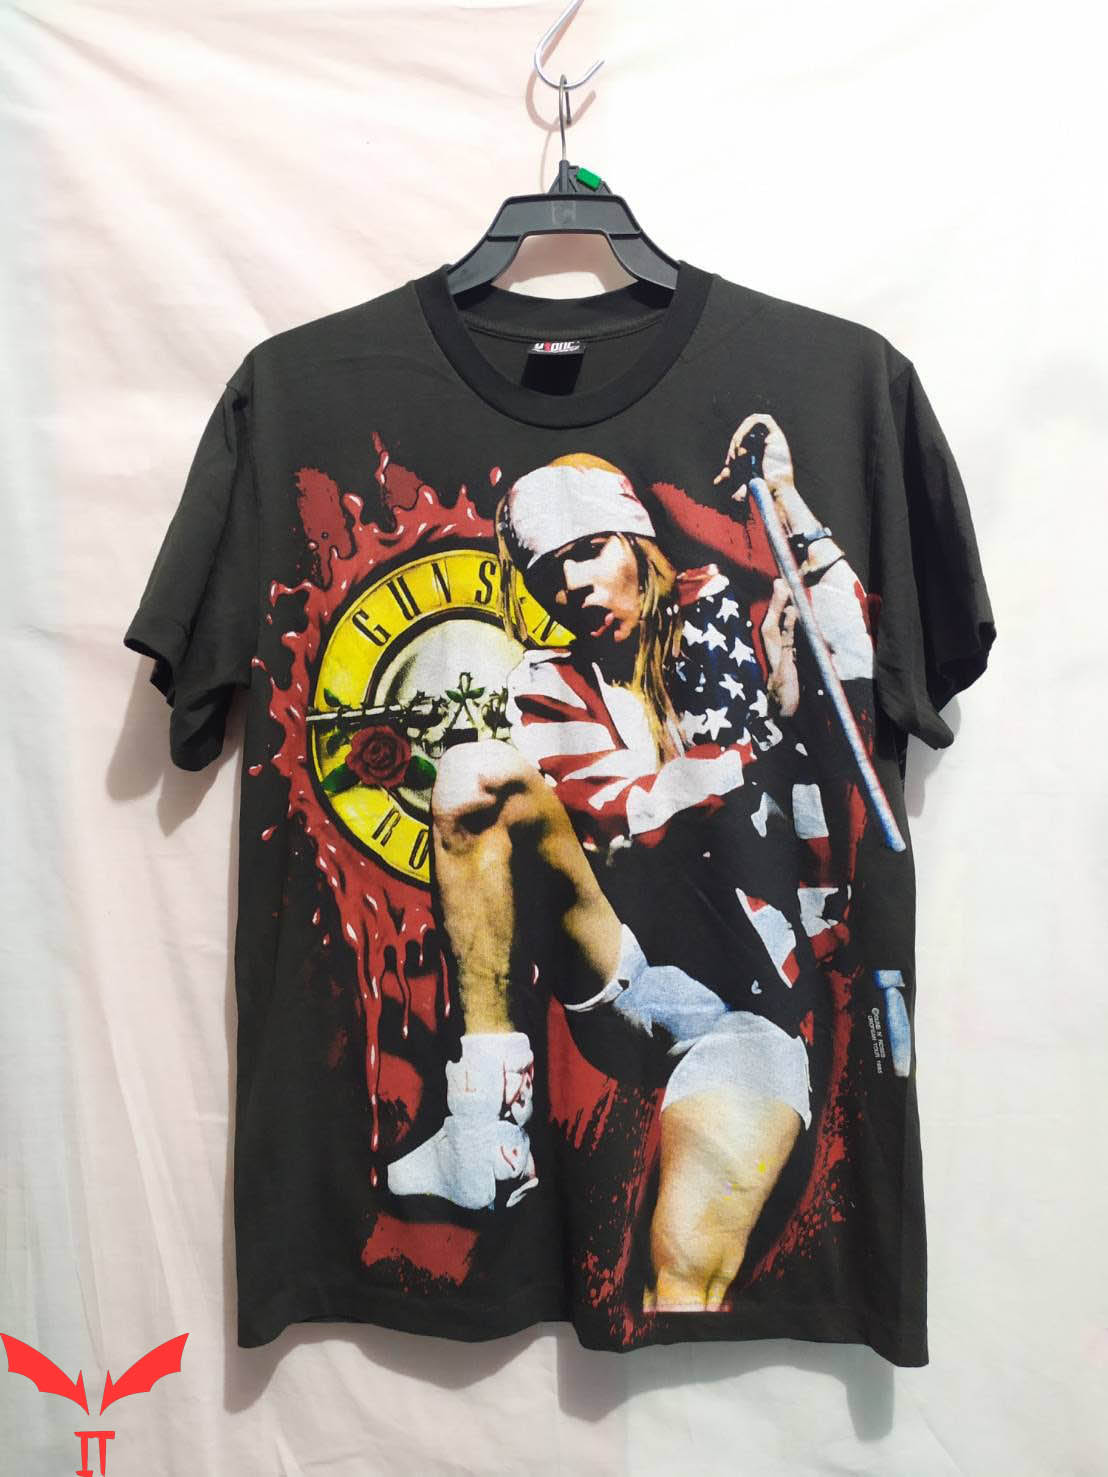 Axl Rose T-Shirt Vintage Axl Roses 90's style T-Shirt